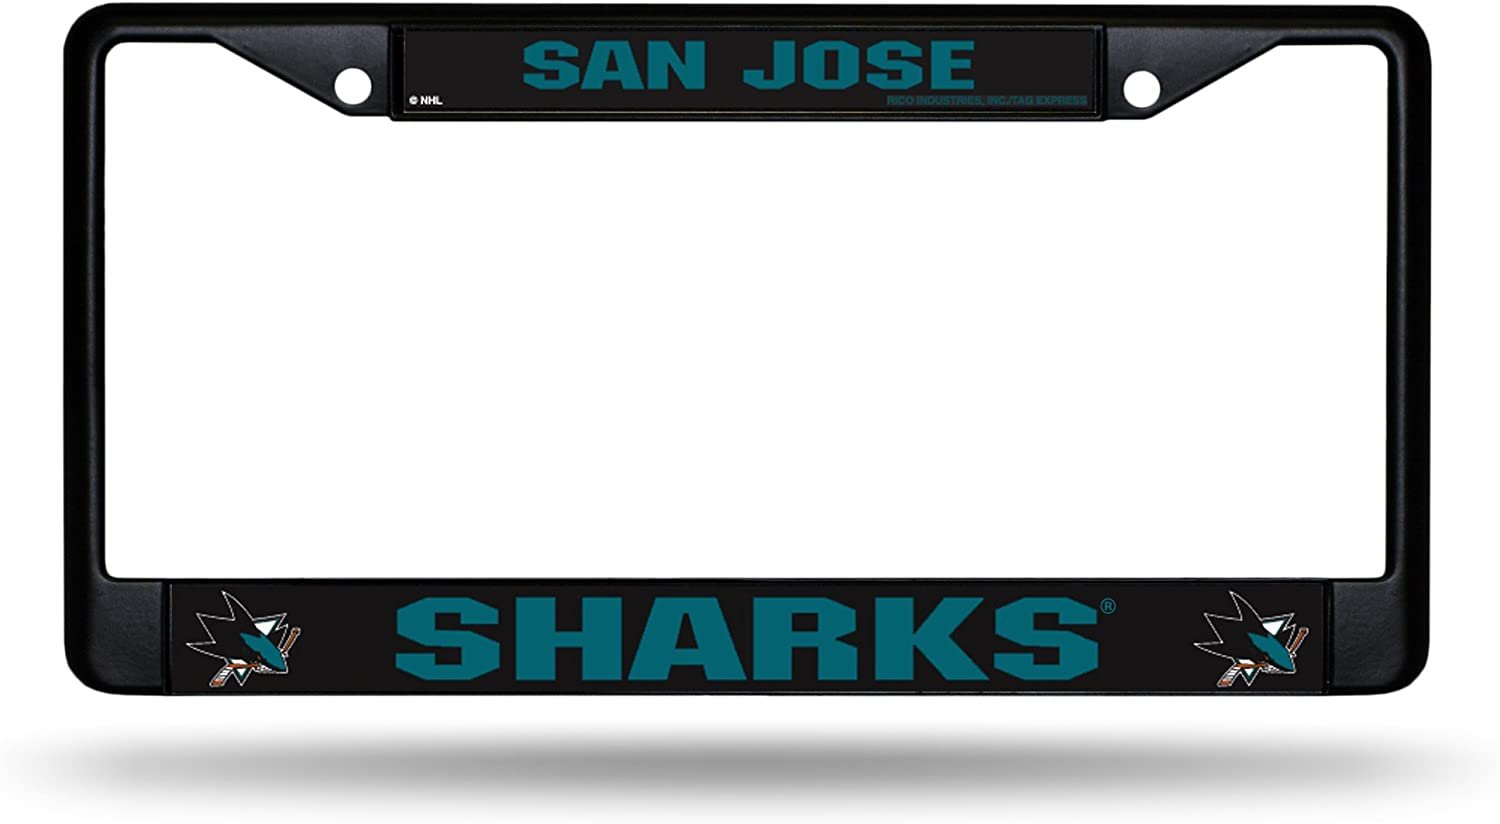 San Jose Sharks Metal License Plate Frame Black Tag Cover 12x6 Inch